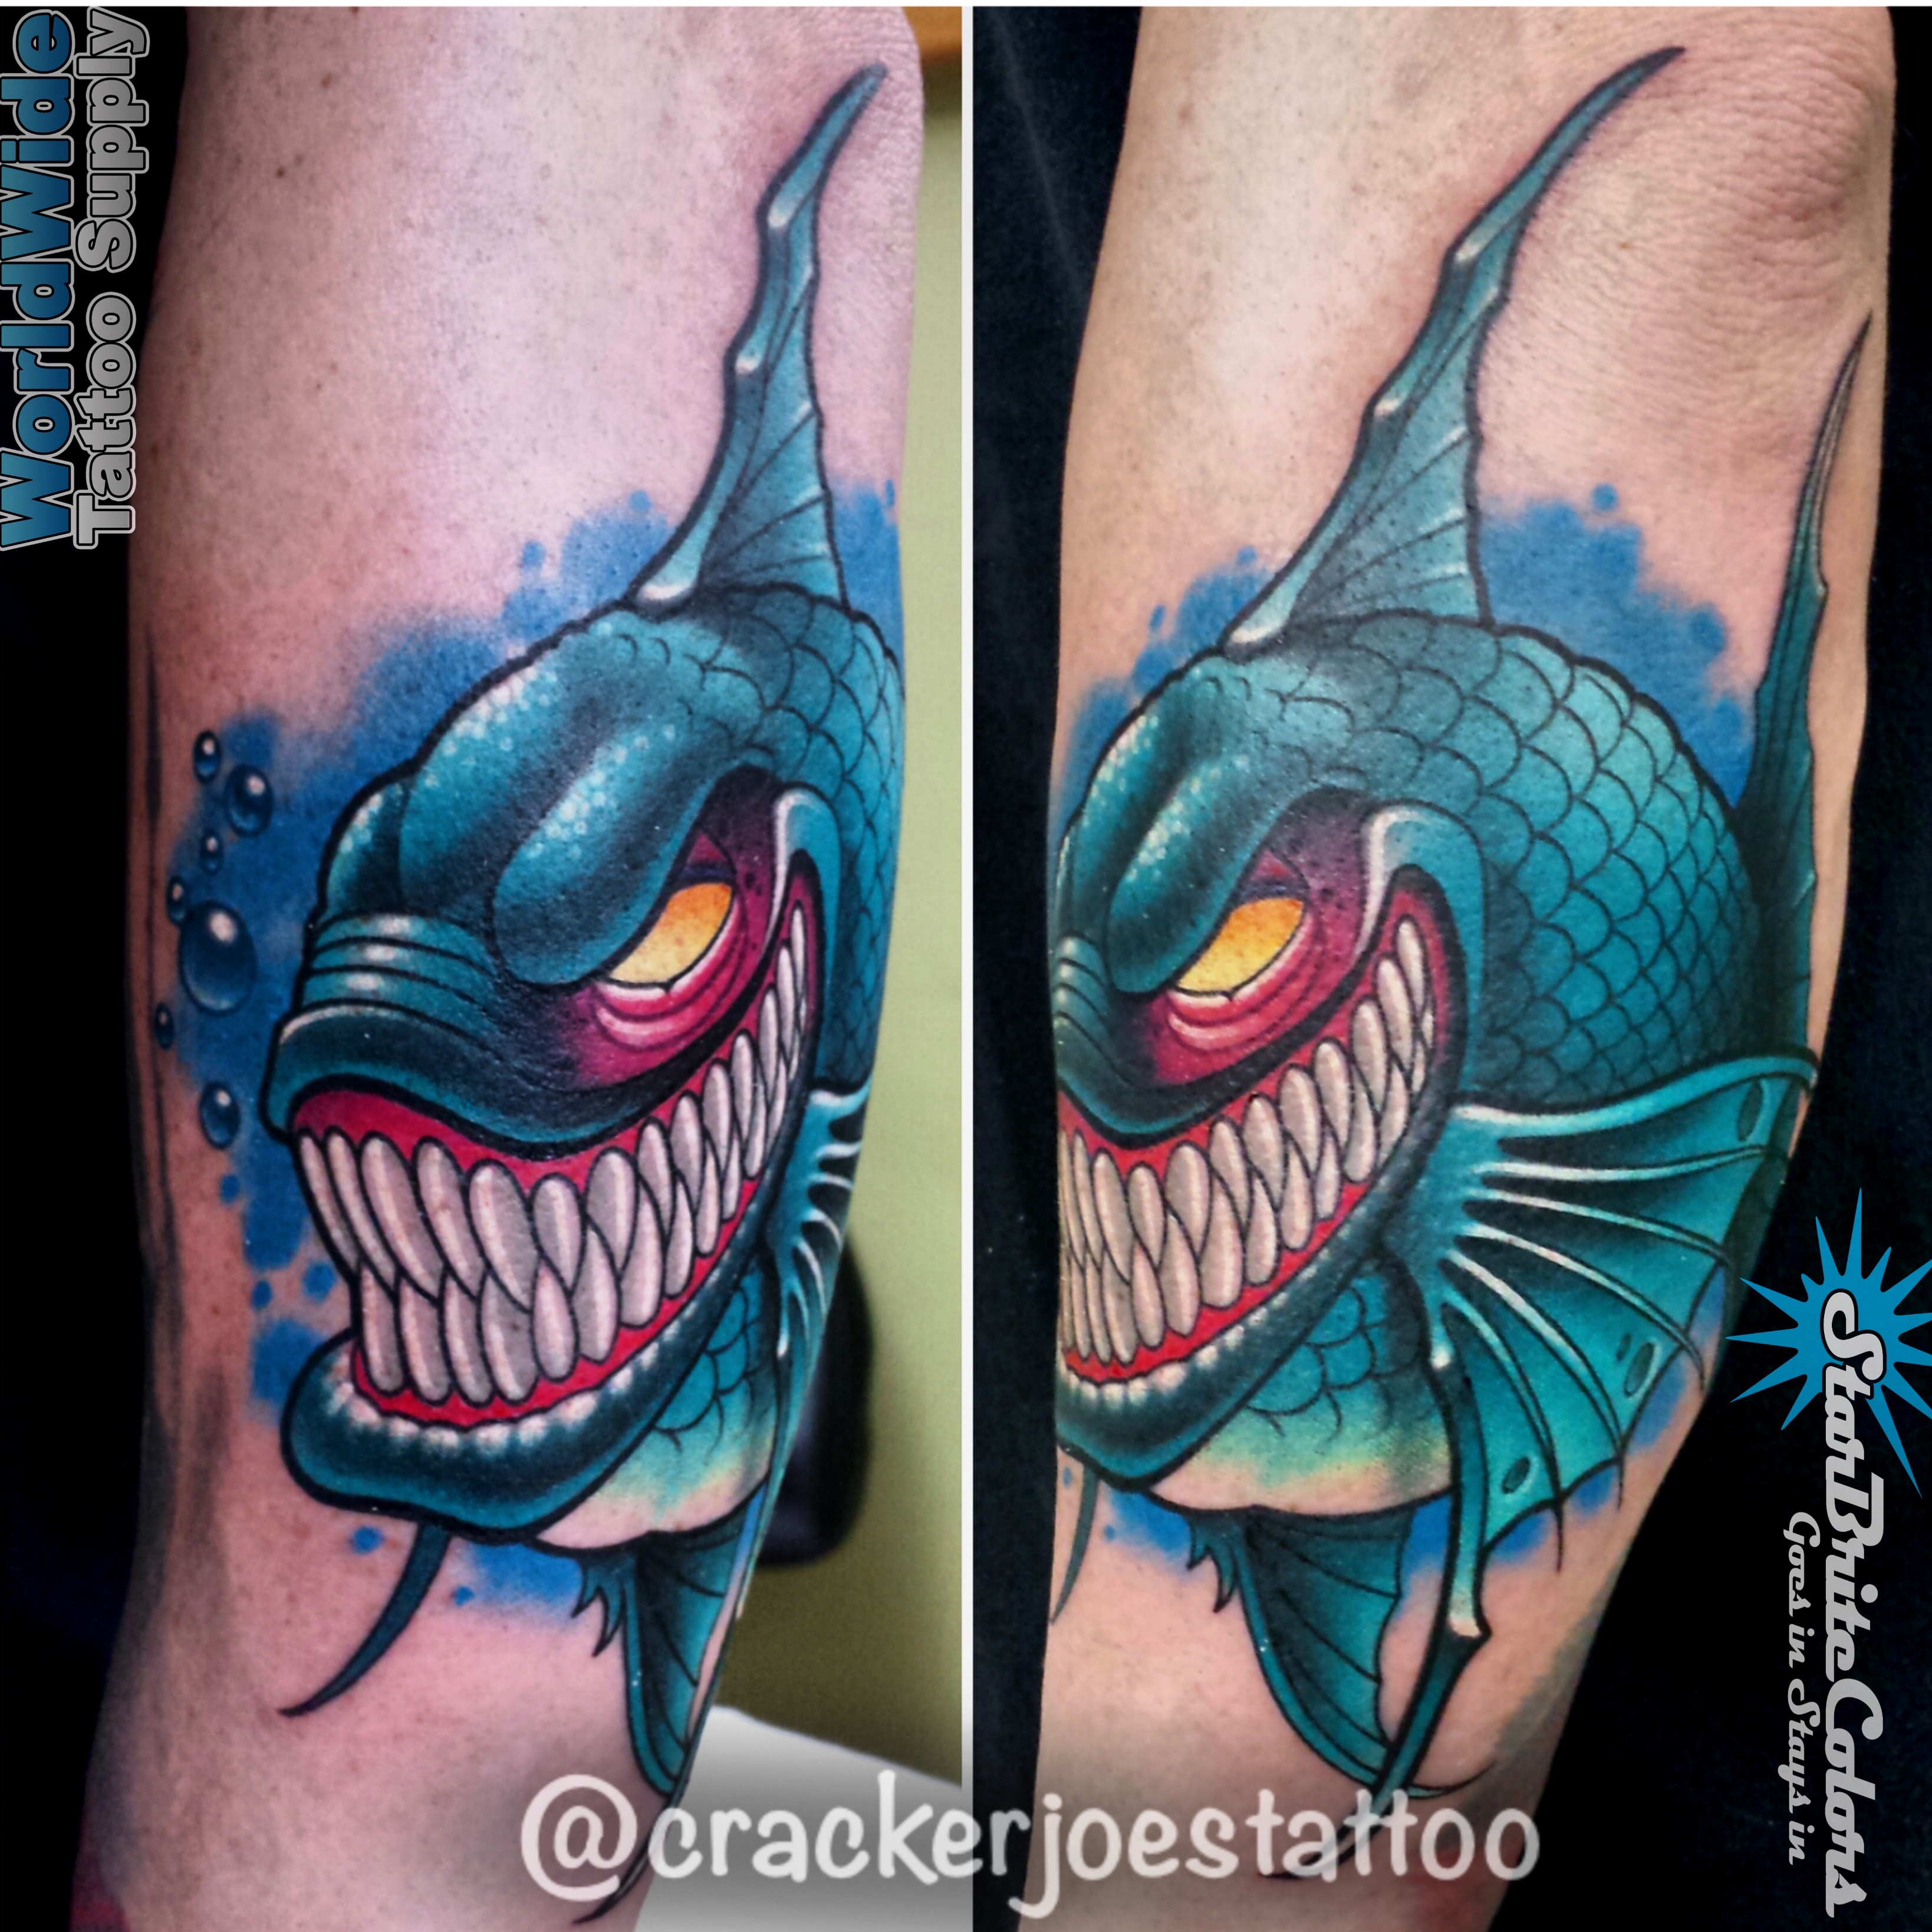 Piranha Tattoo made by Cracker Joe Swider in Connecticut